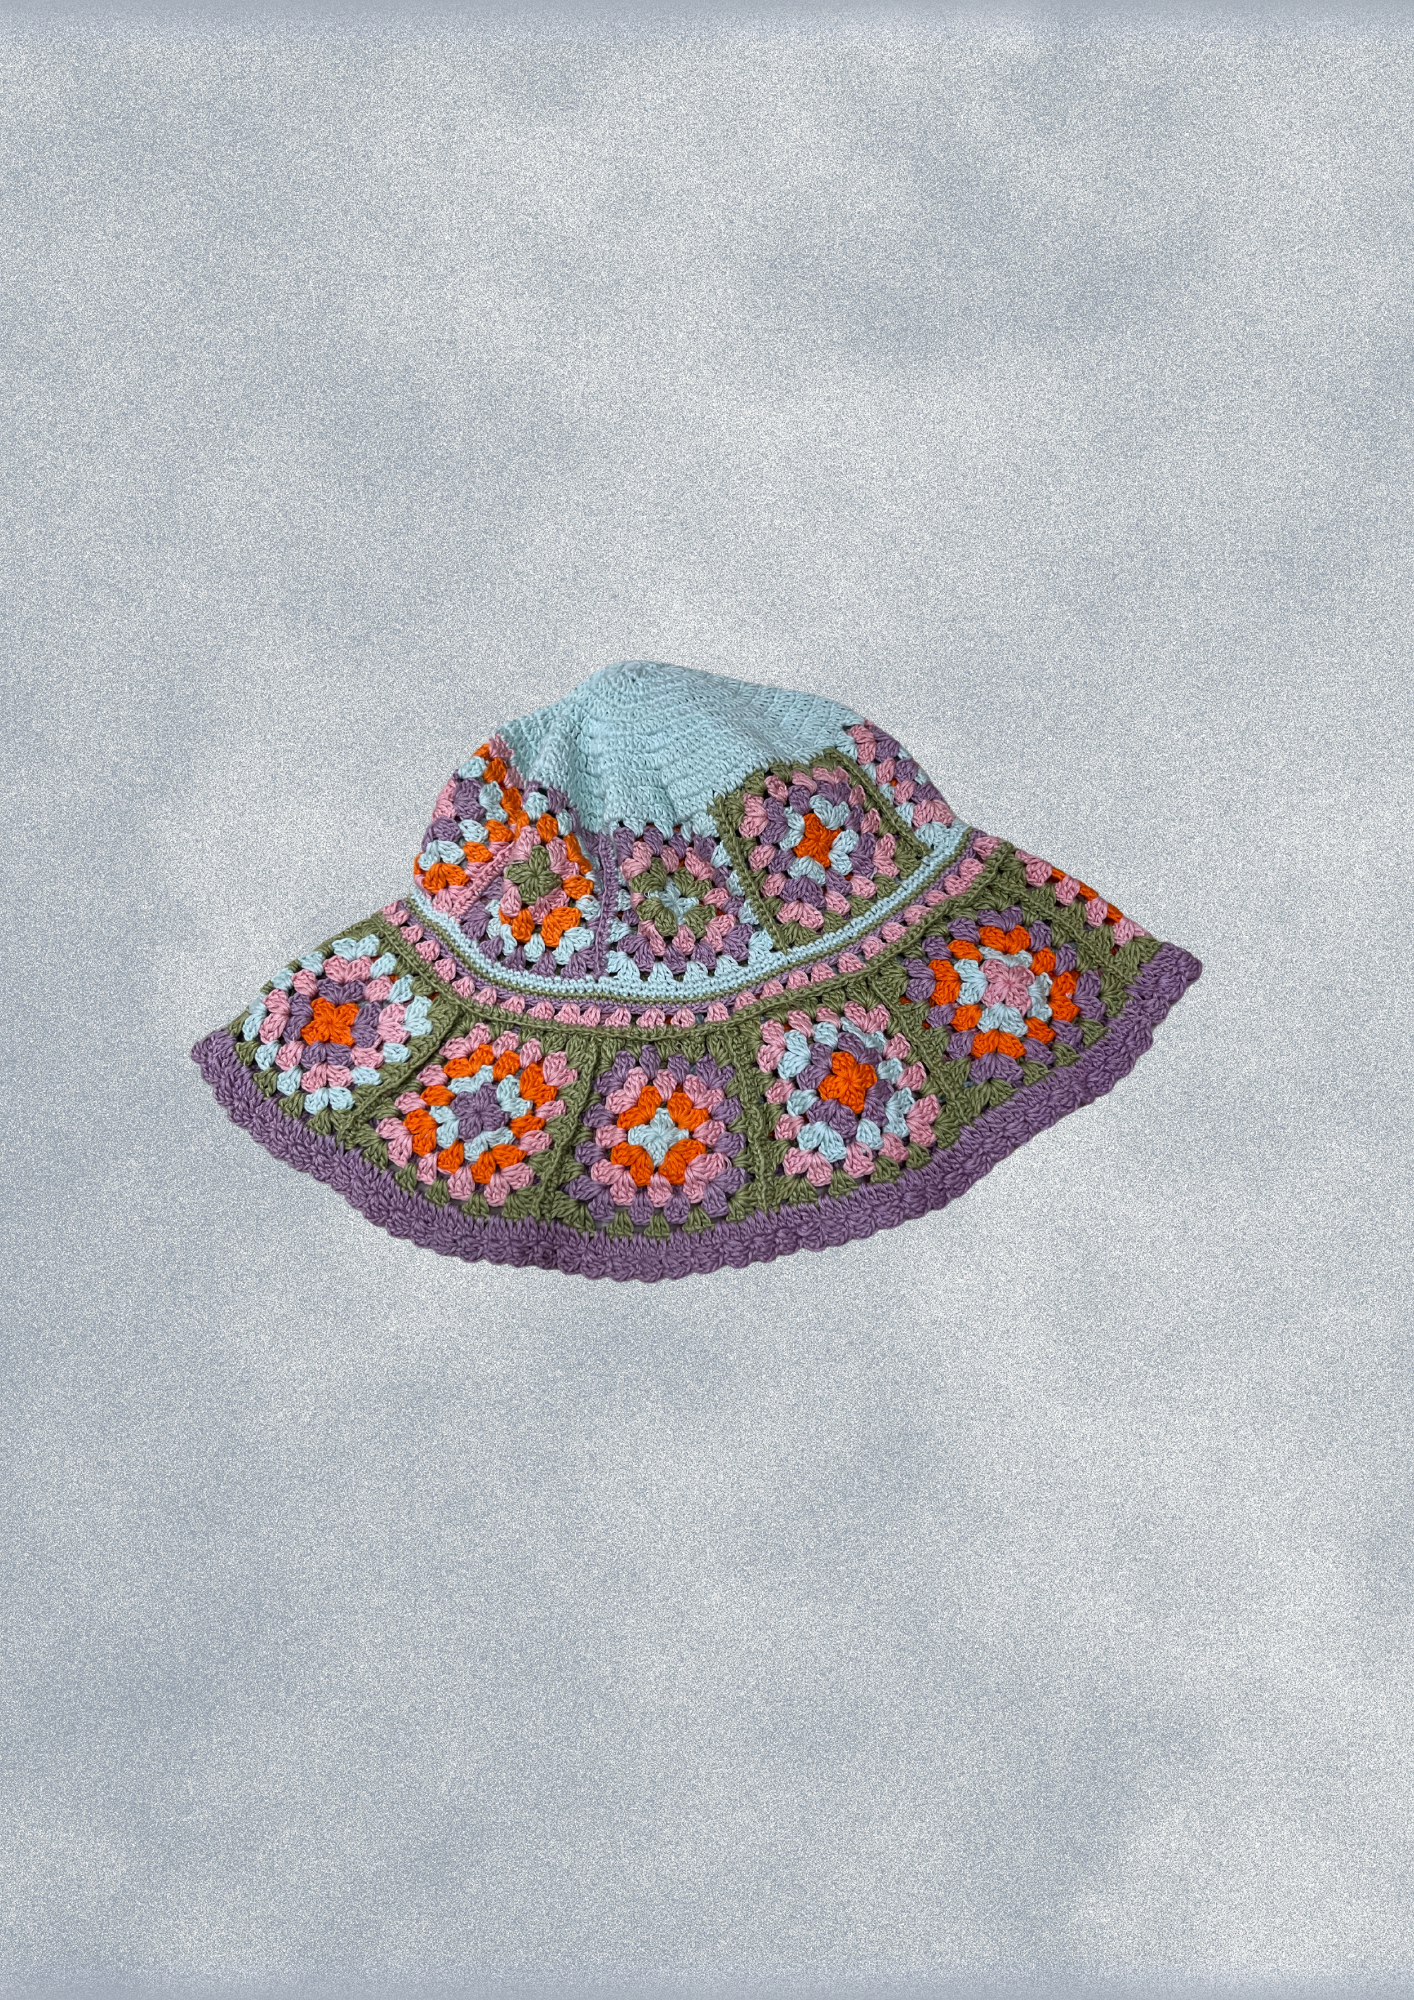 Crochet Bucket Hat